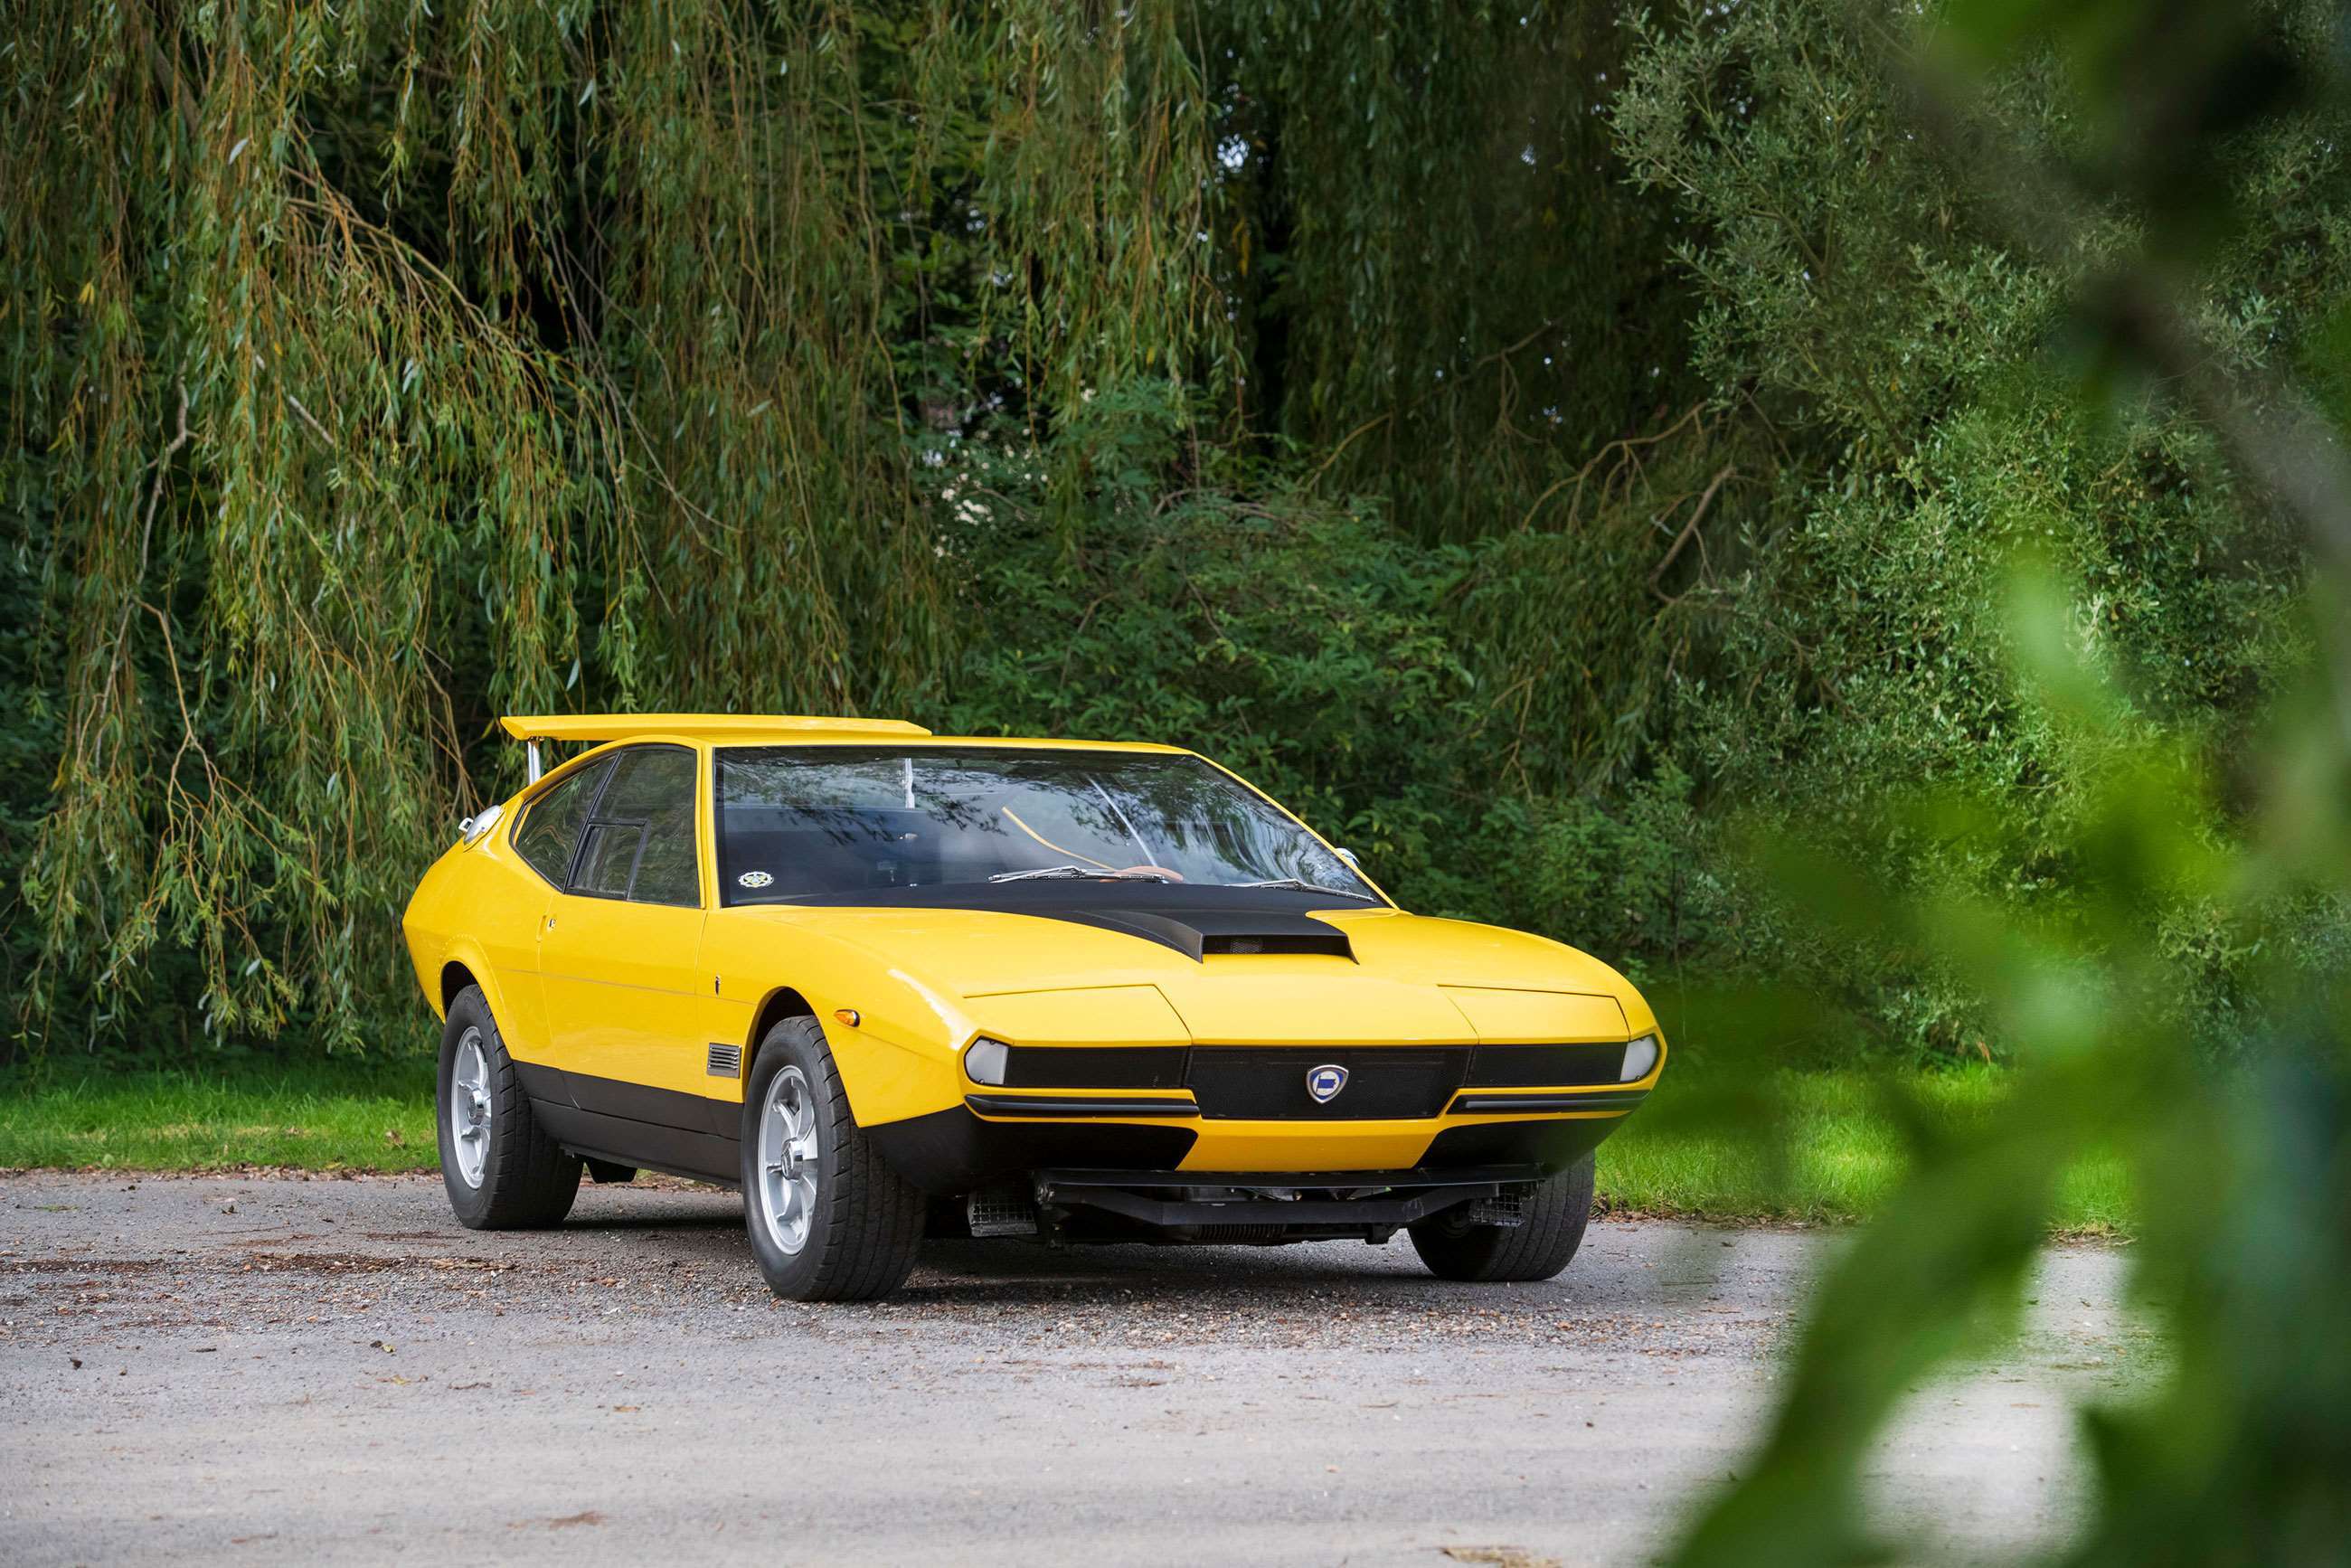 best-lancia-concept-cars-4-1970-lancia-fulvia-hf-competizione-rm-sothebys-goodwood-15112021.jpg